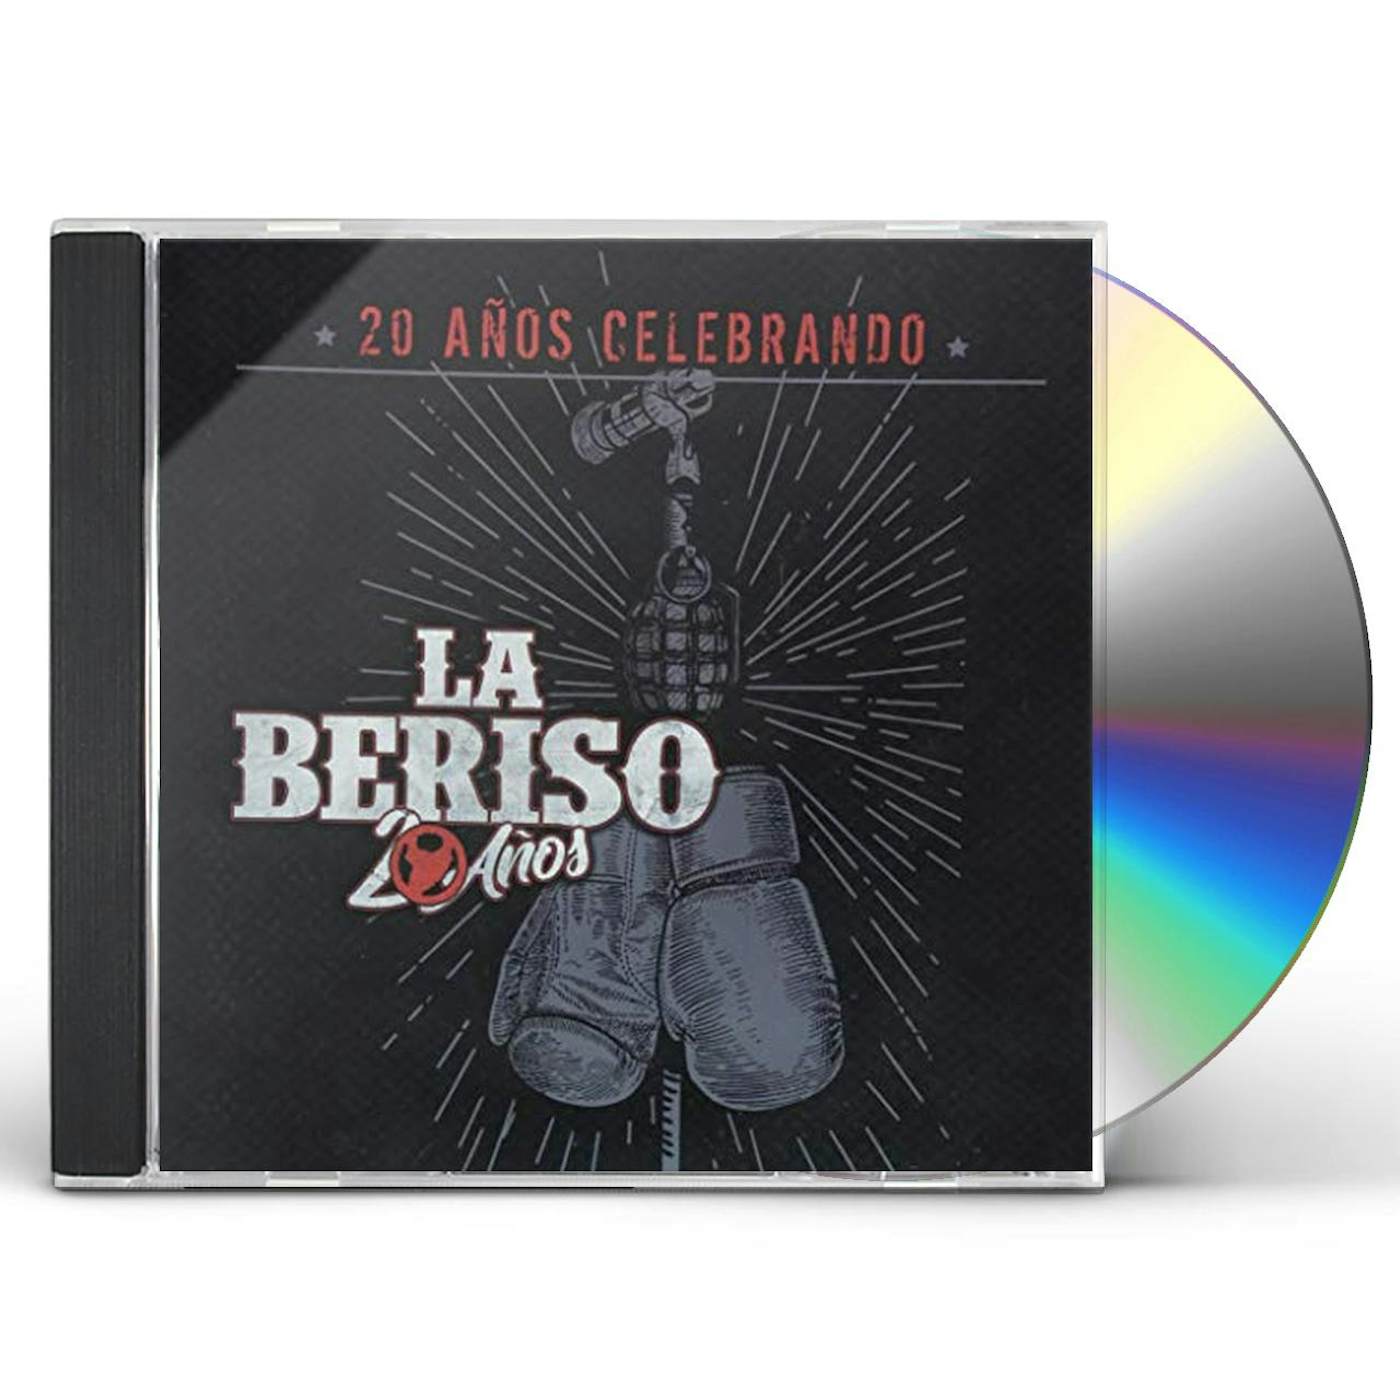 La Beriso 20 ANOS CELEBRANDO CD